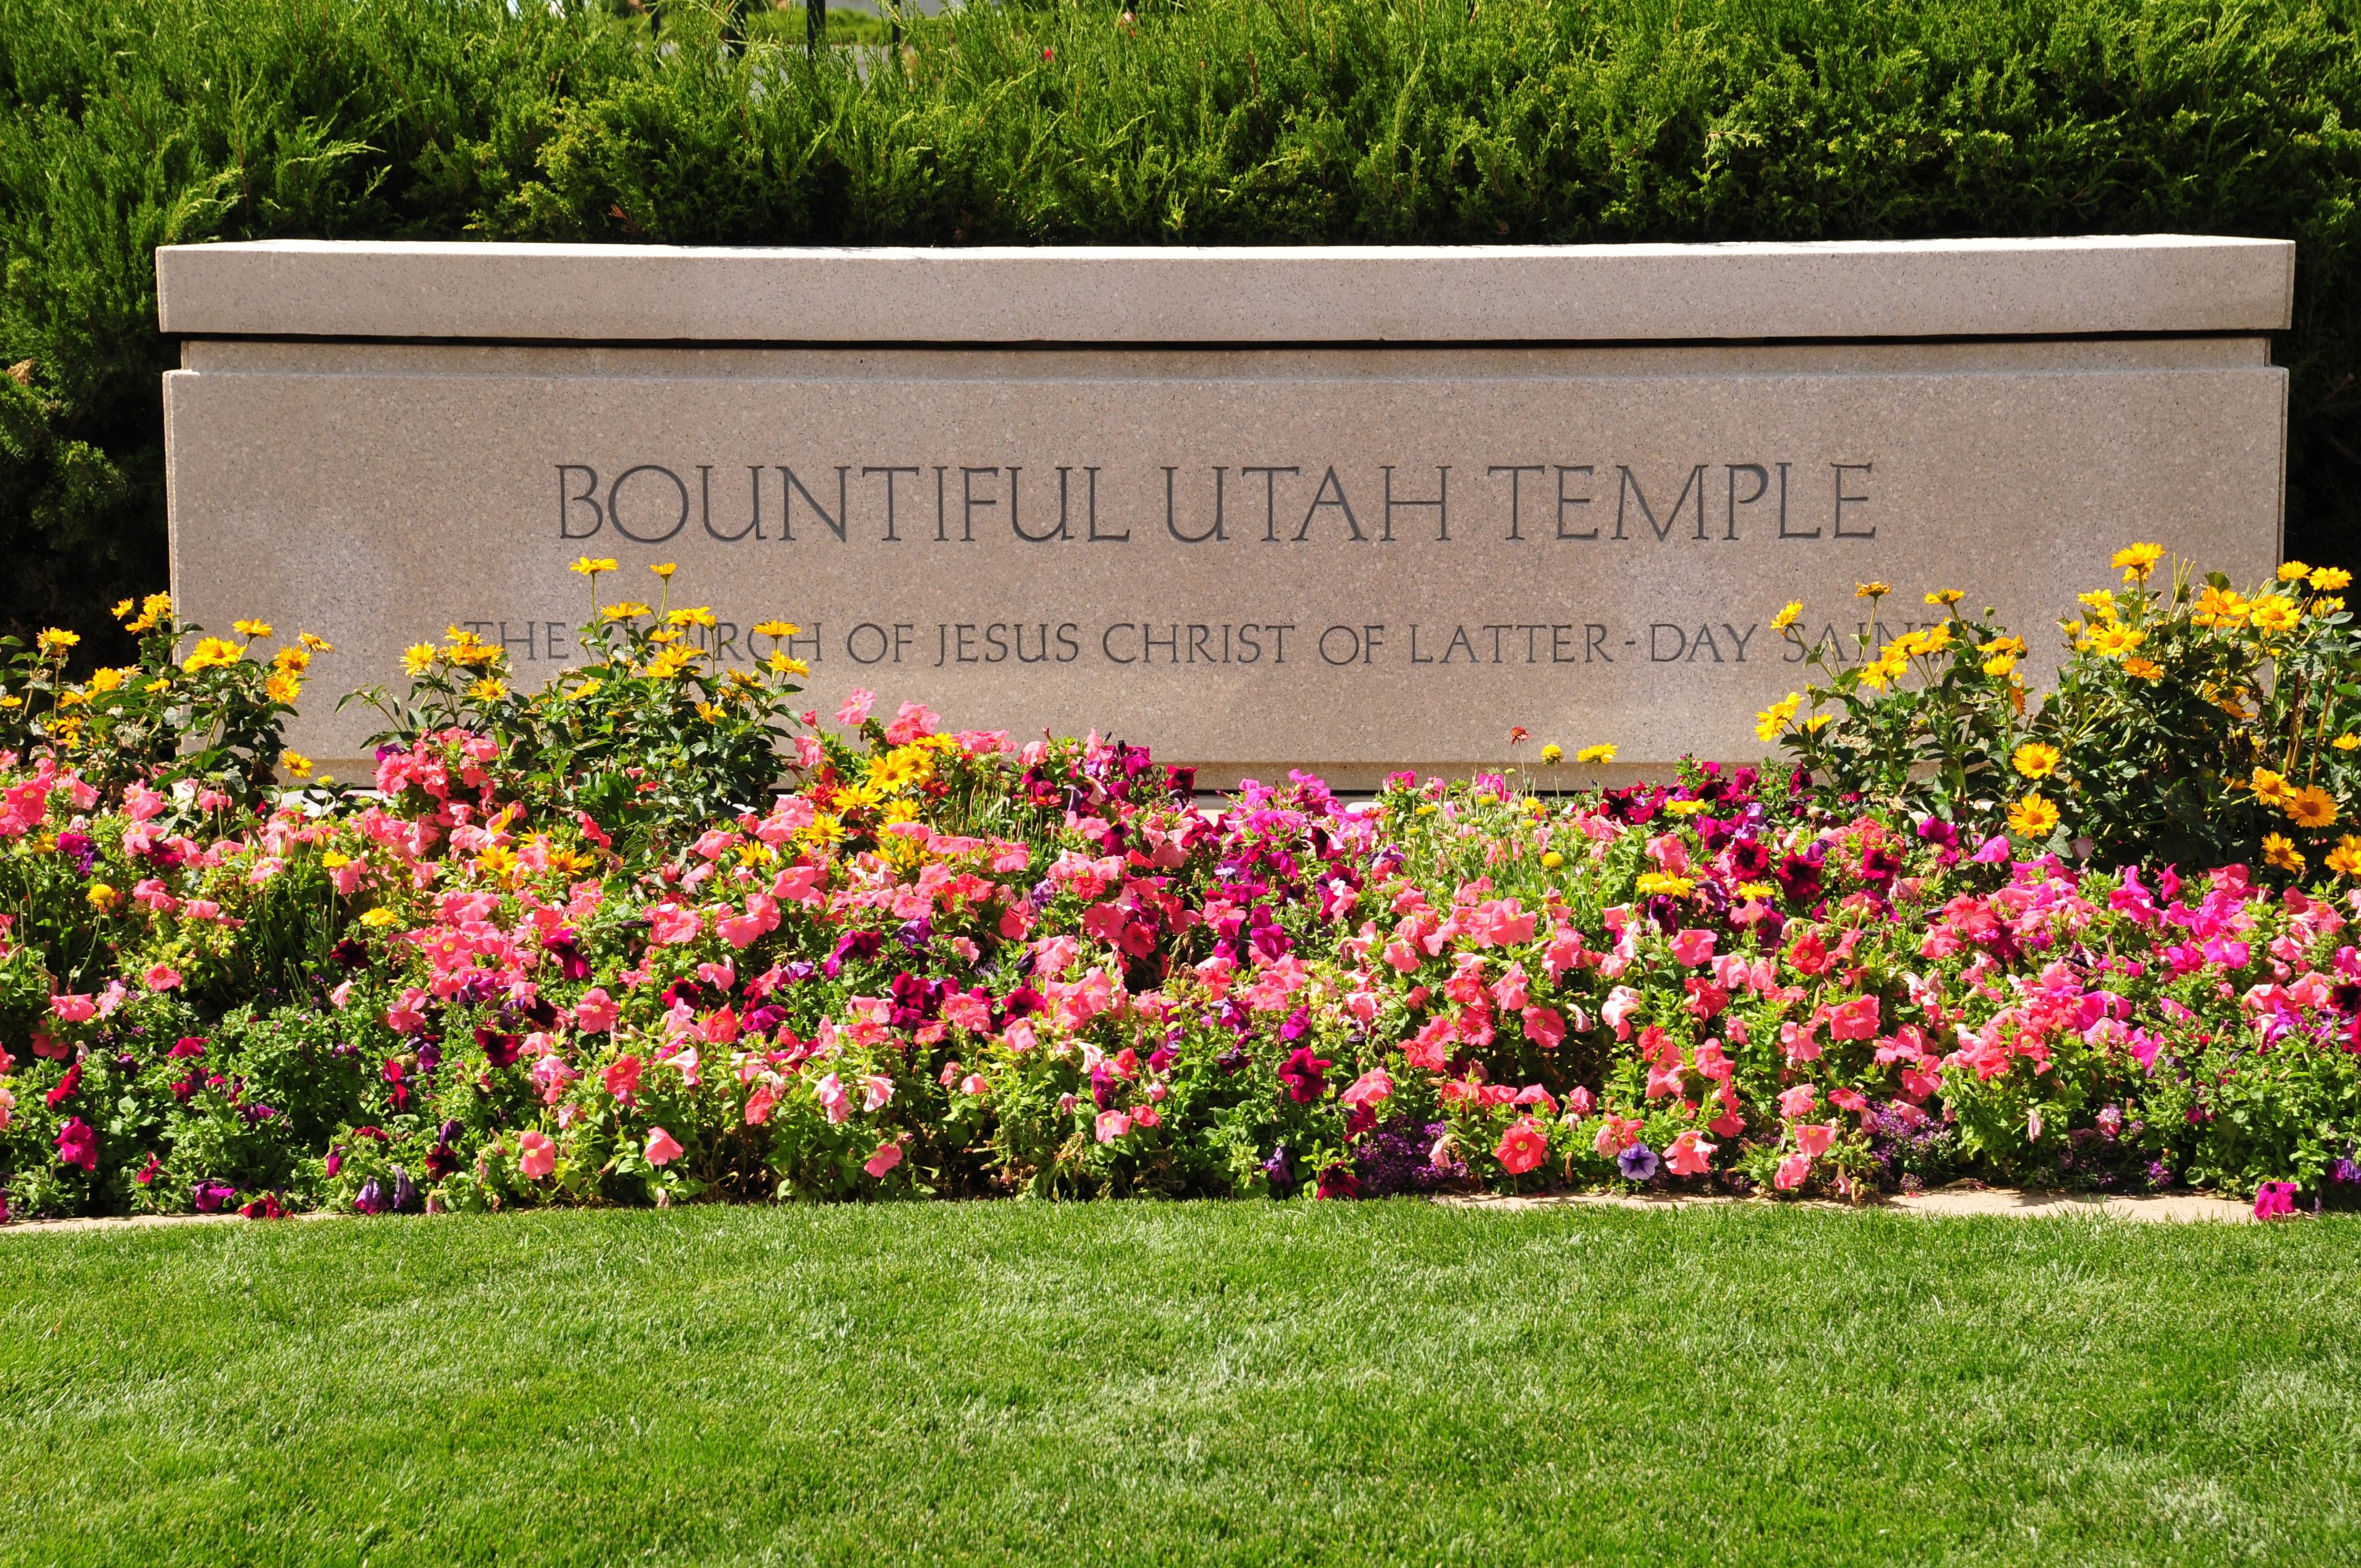 The Bountiful Utah Temple name sign.